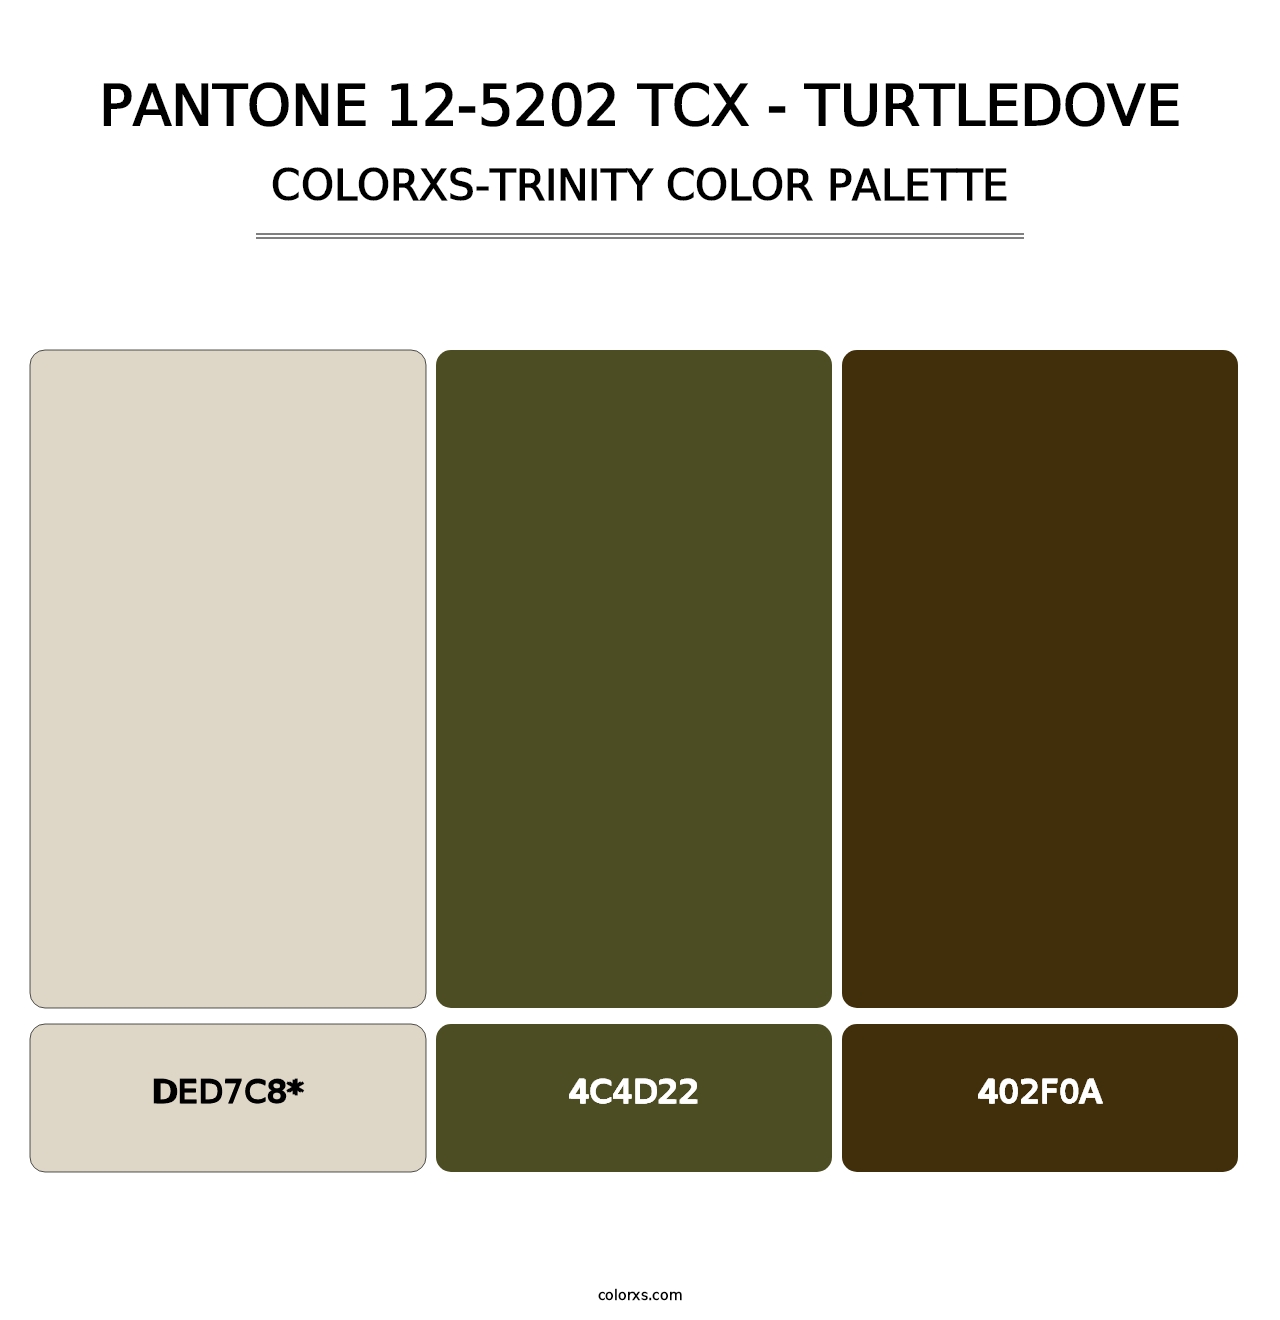 PANTONE 12-5202 TCX - Turtledove - Colorxs Trinity Palette